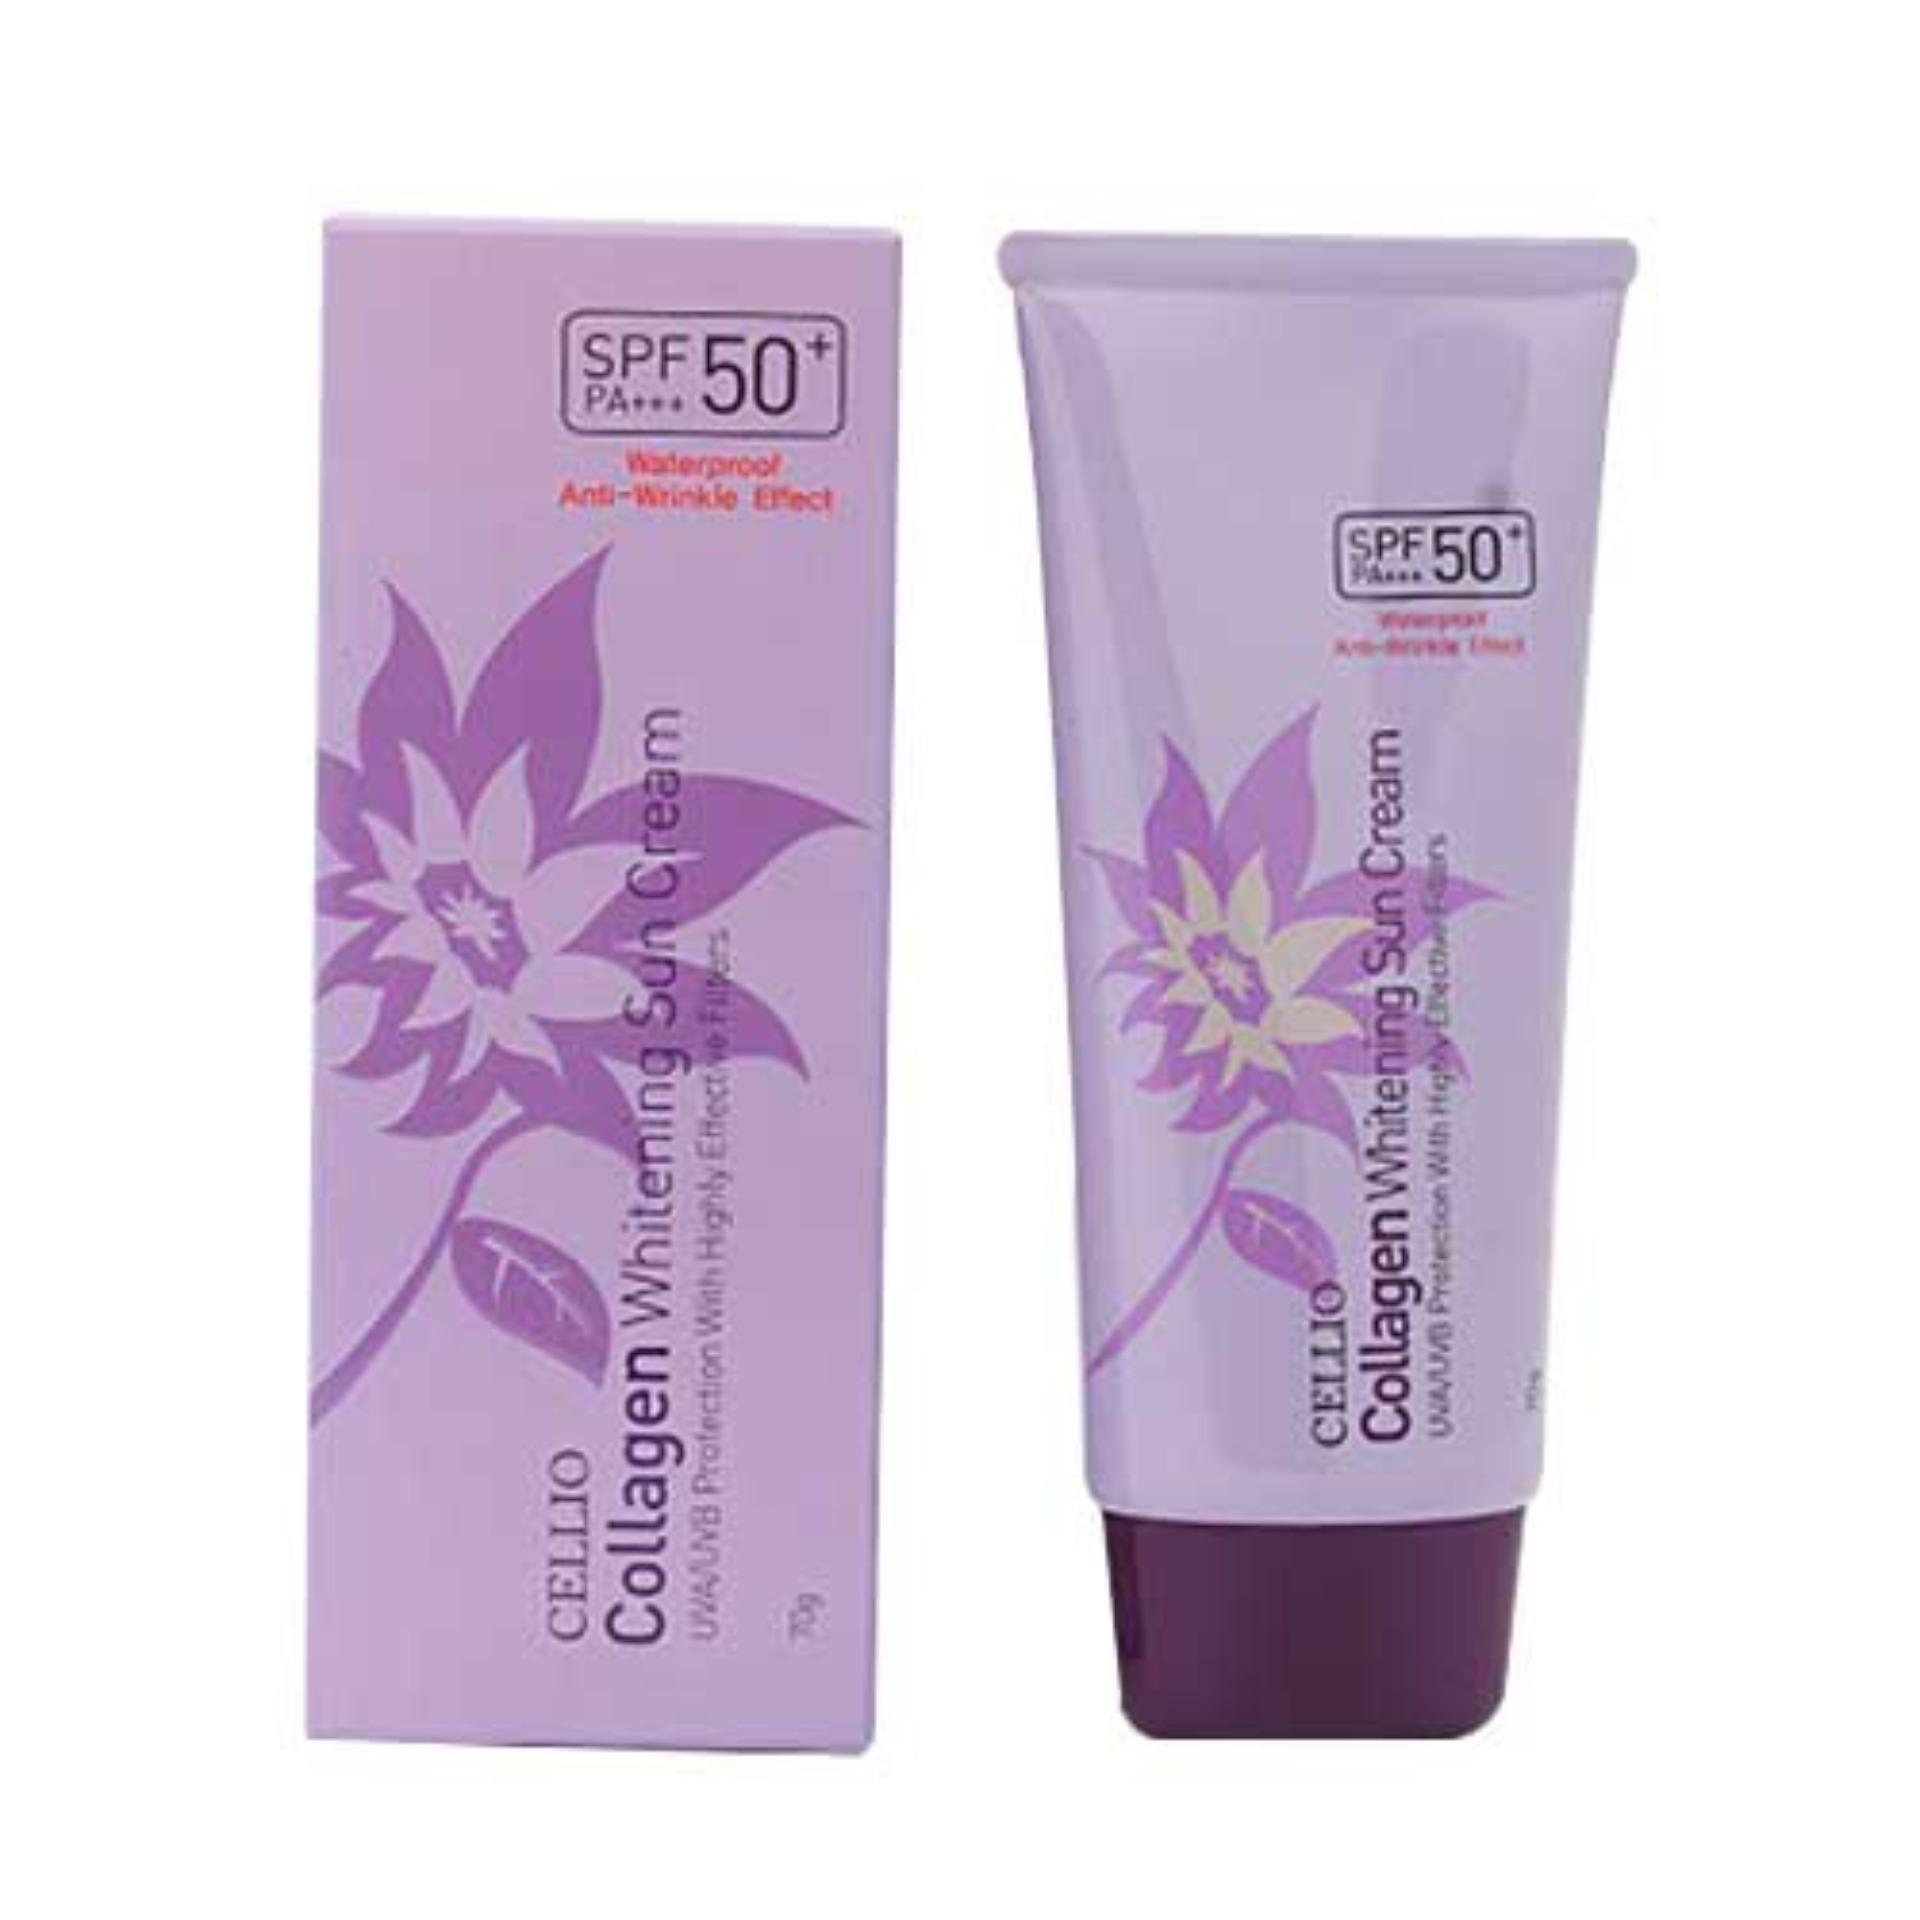 Kem chống nắng Cellio Collagen Whitening Sun Cream SPF50 PA+++